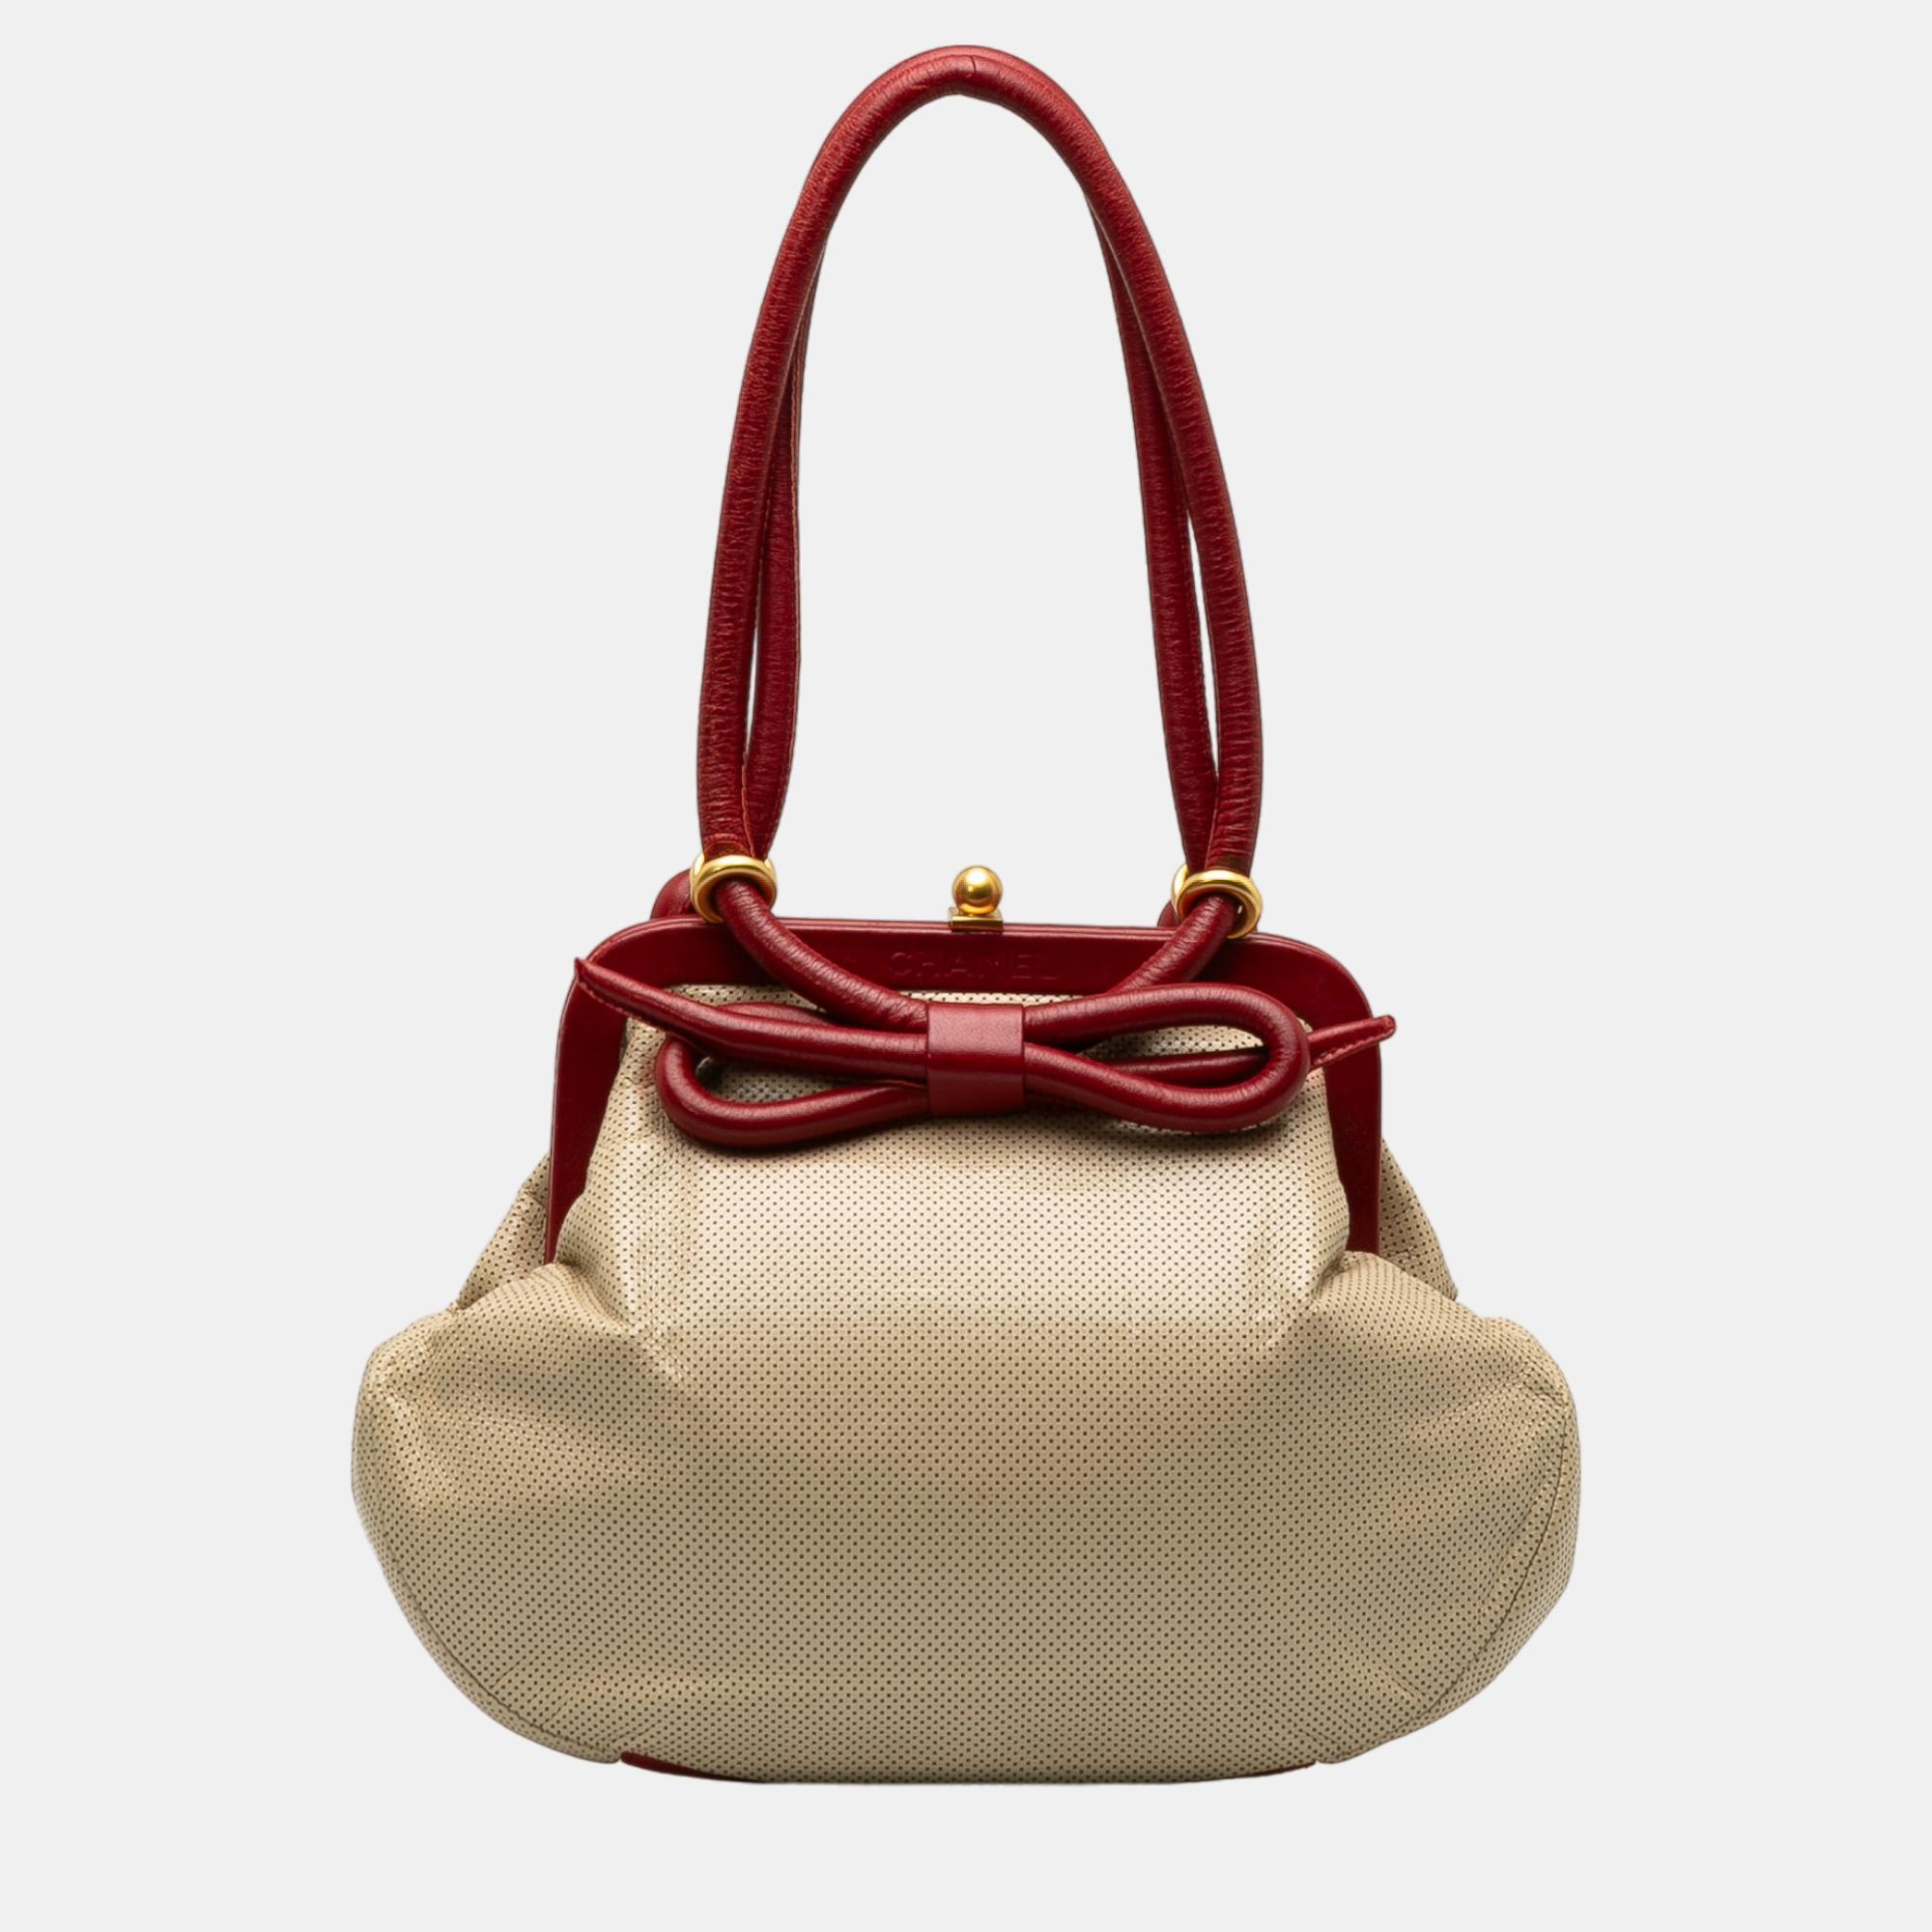 Chanel beige perforated bow frame handbag